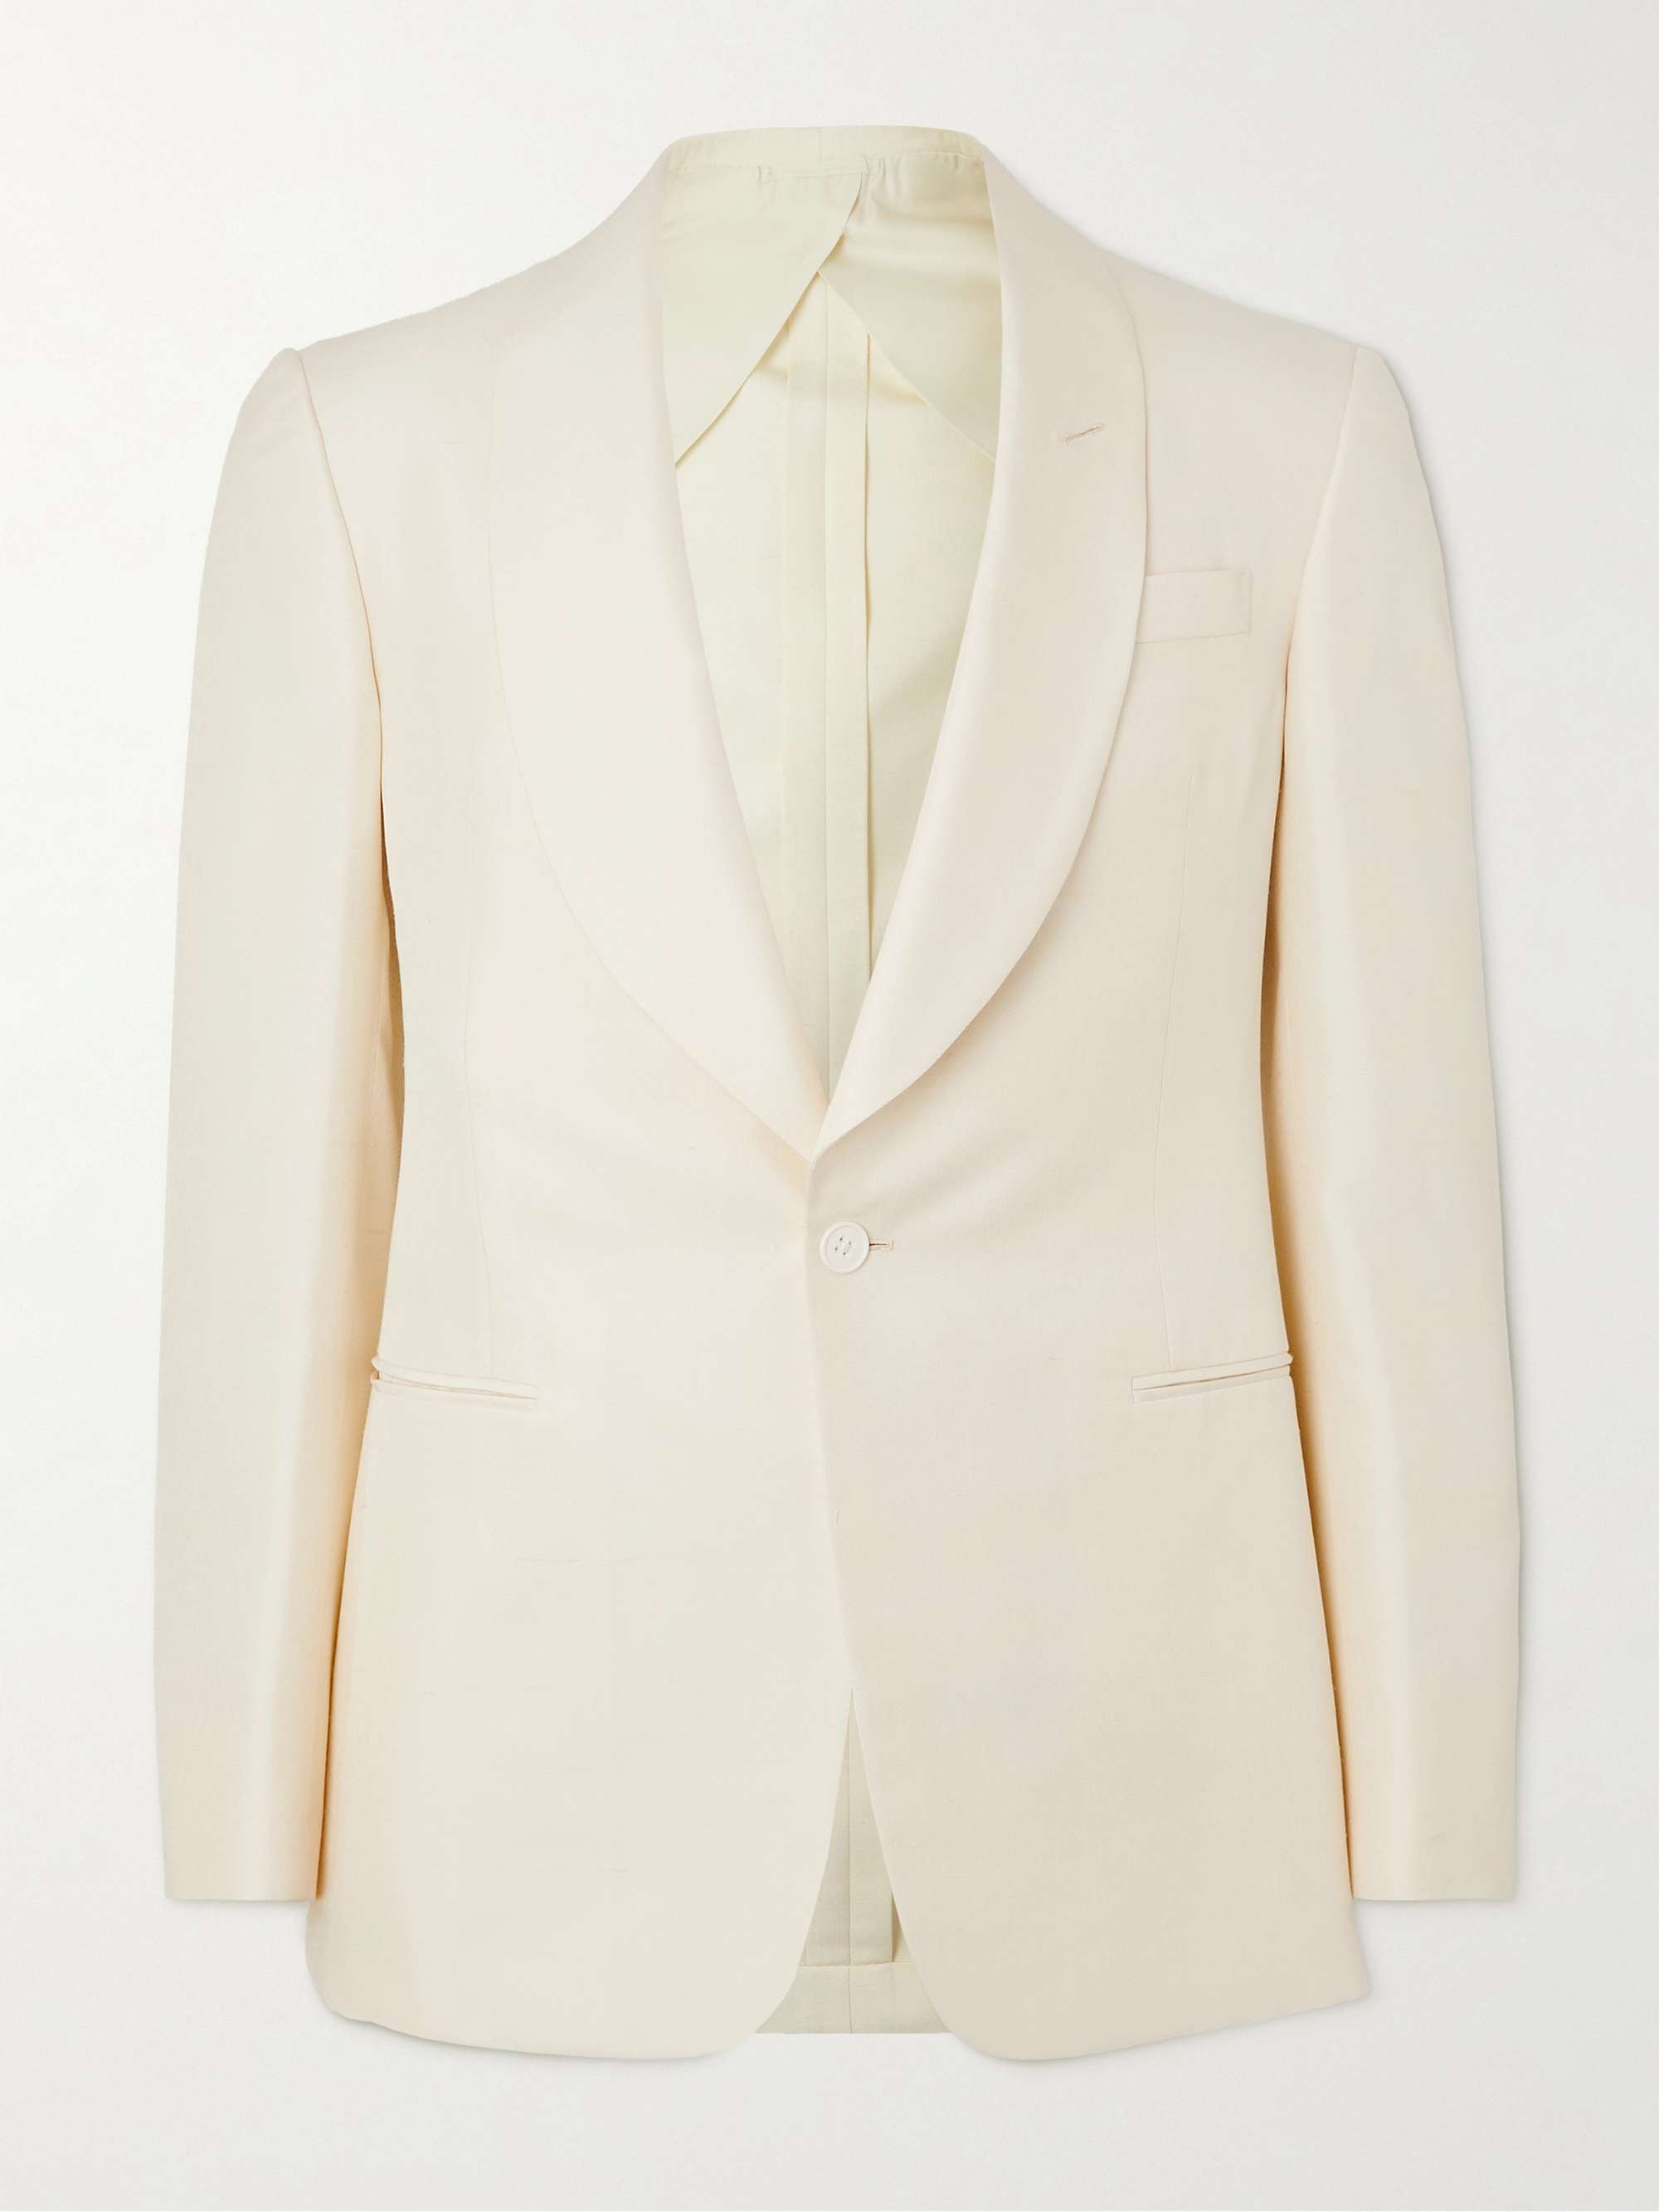 RALPH LAUREN PURPLE LABEL Slim-Fit Silk Tuxedo Jacket